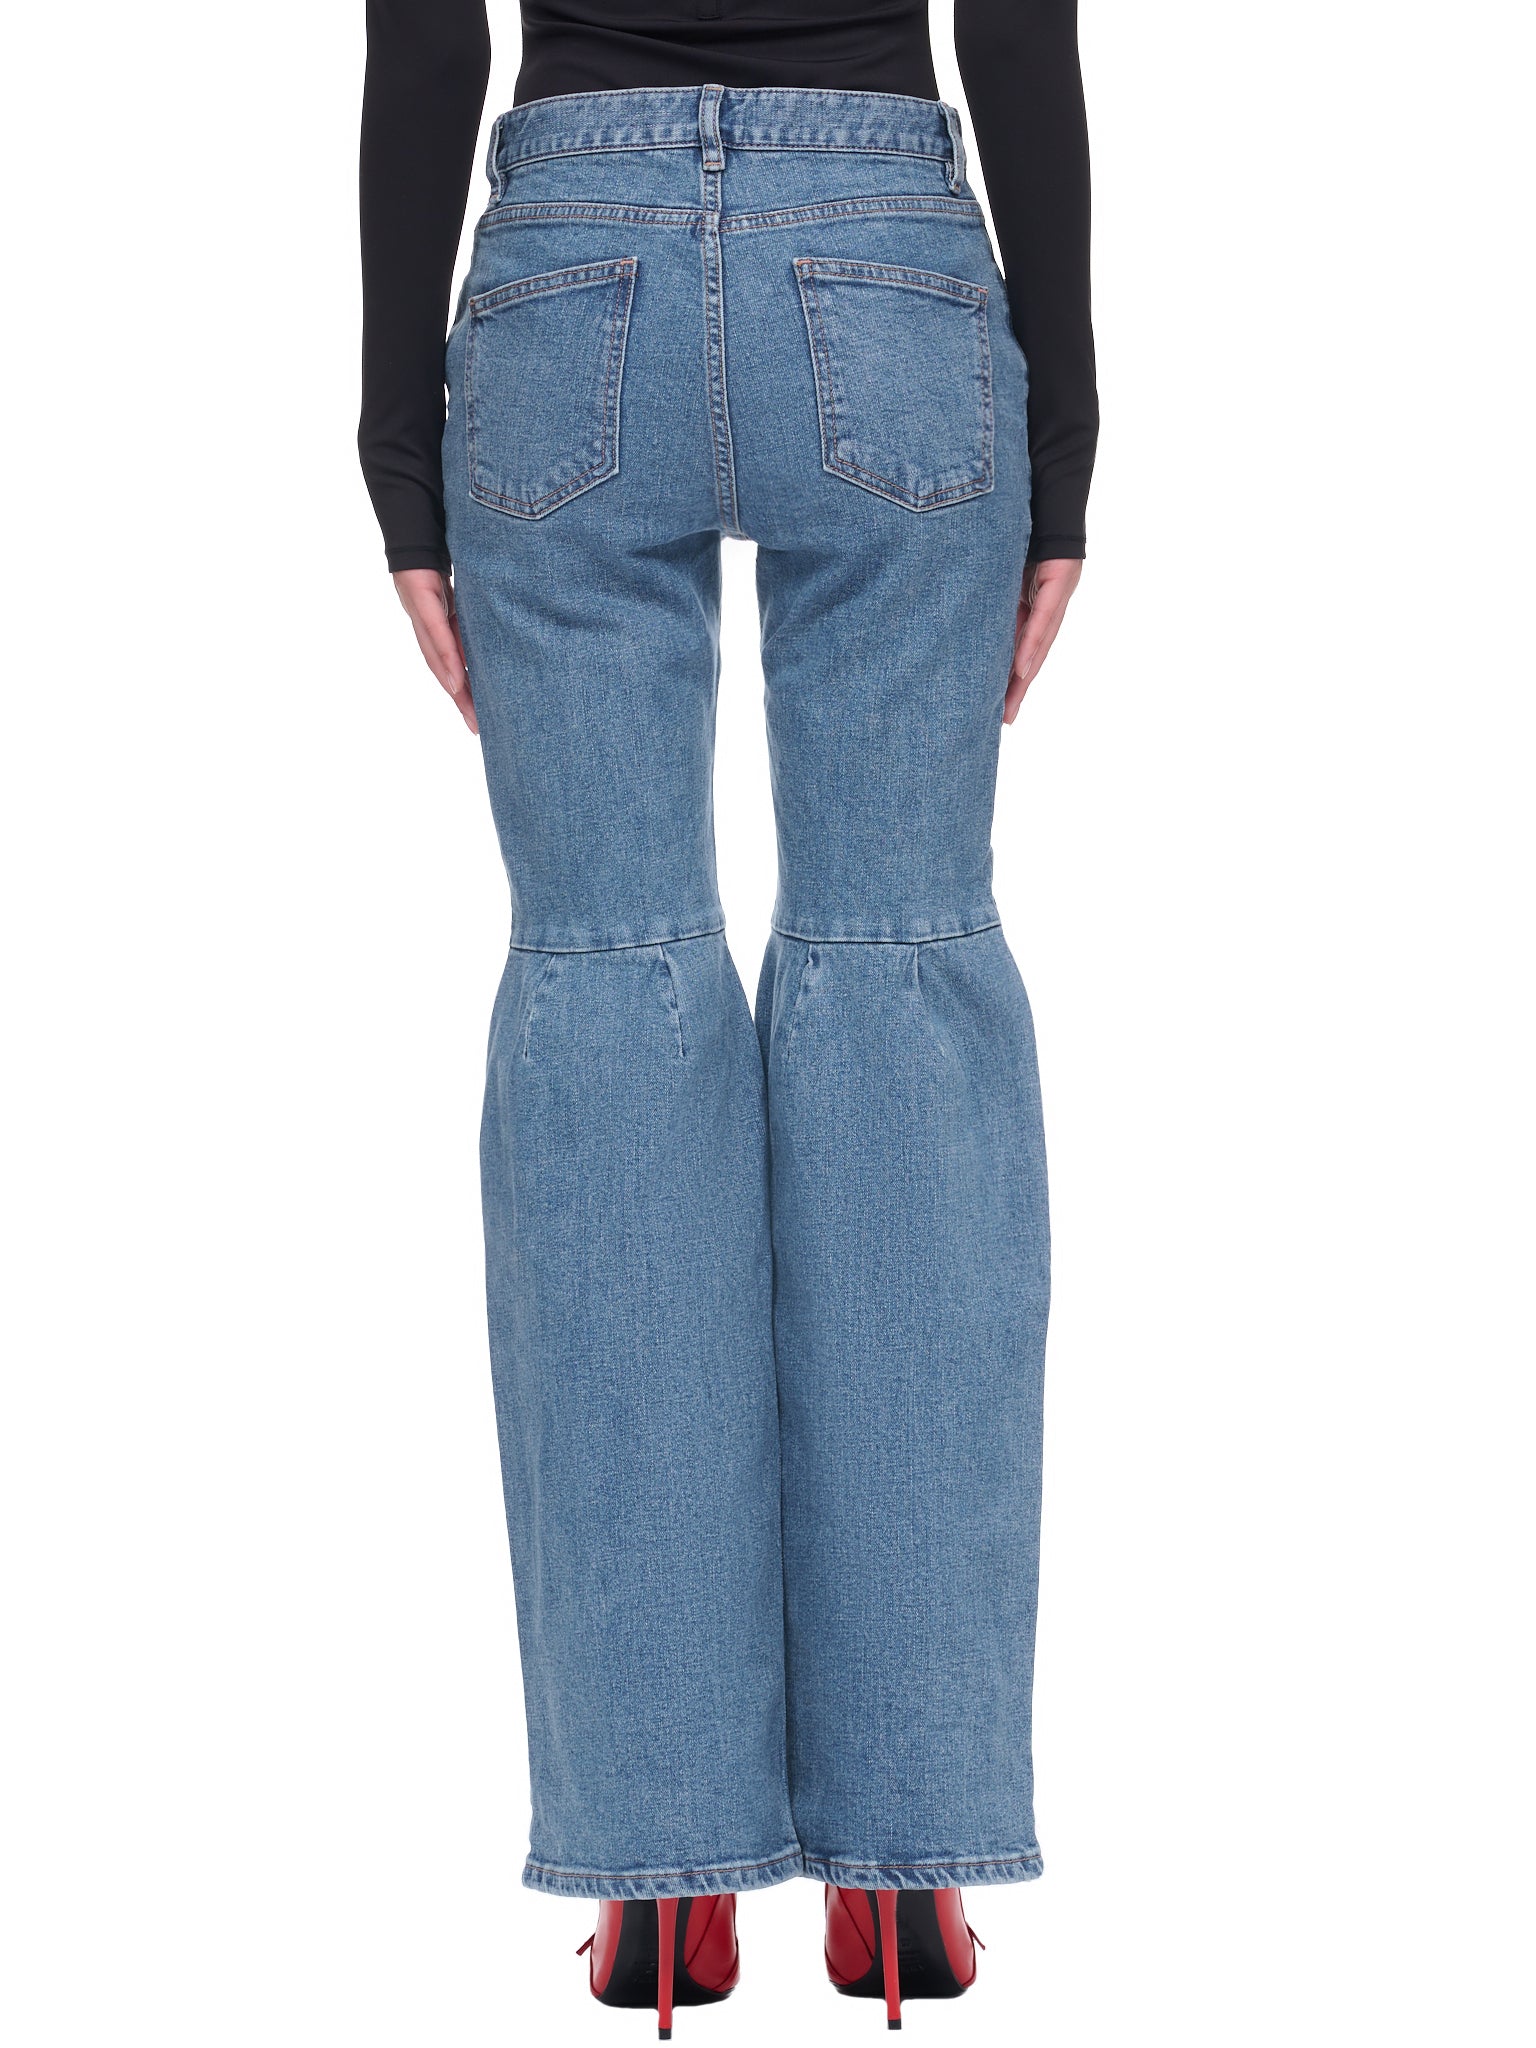 Bella Jeans (JN031-BL-BLUE)